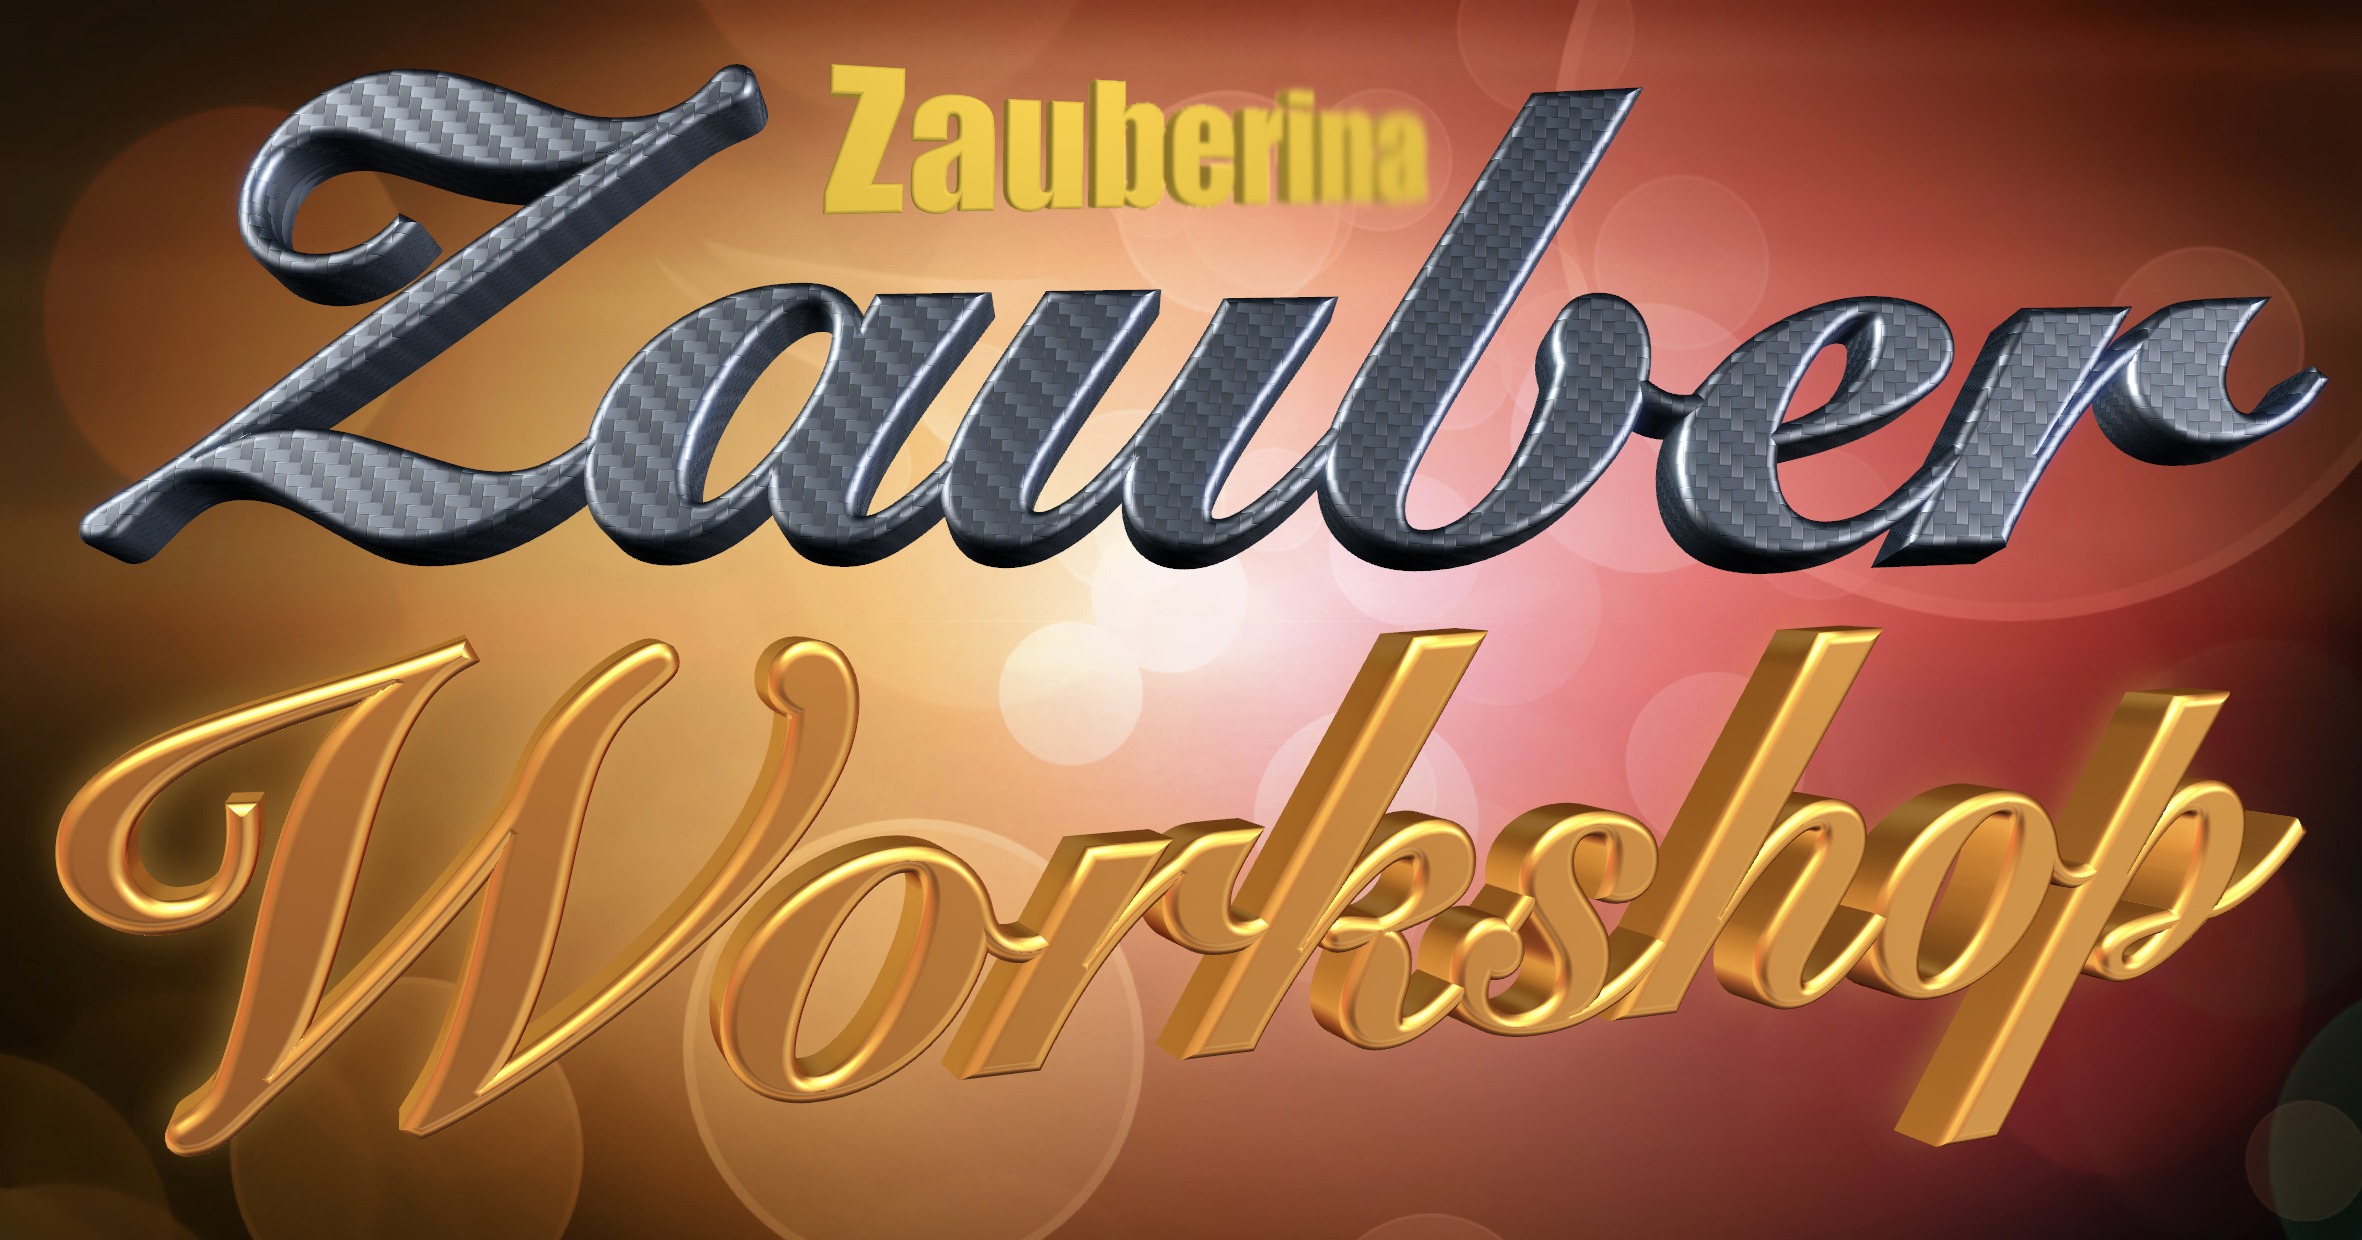 Zauberina-Zauberworkshop-Logo